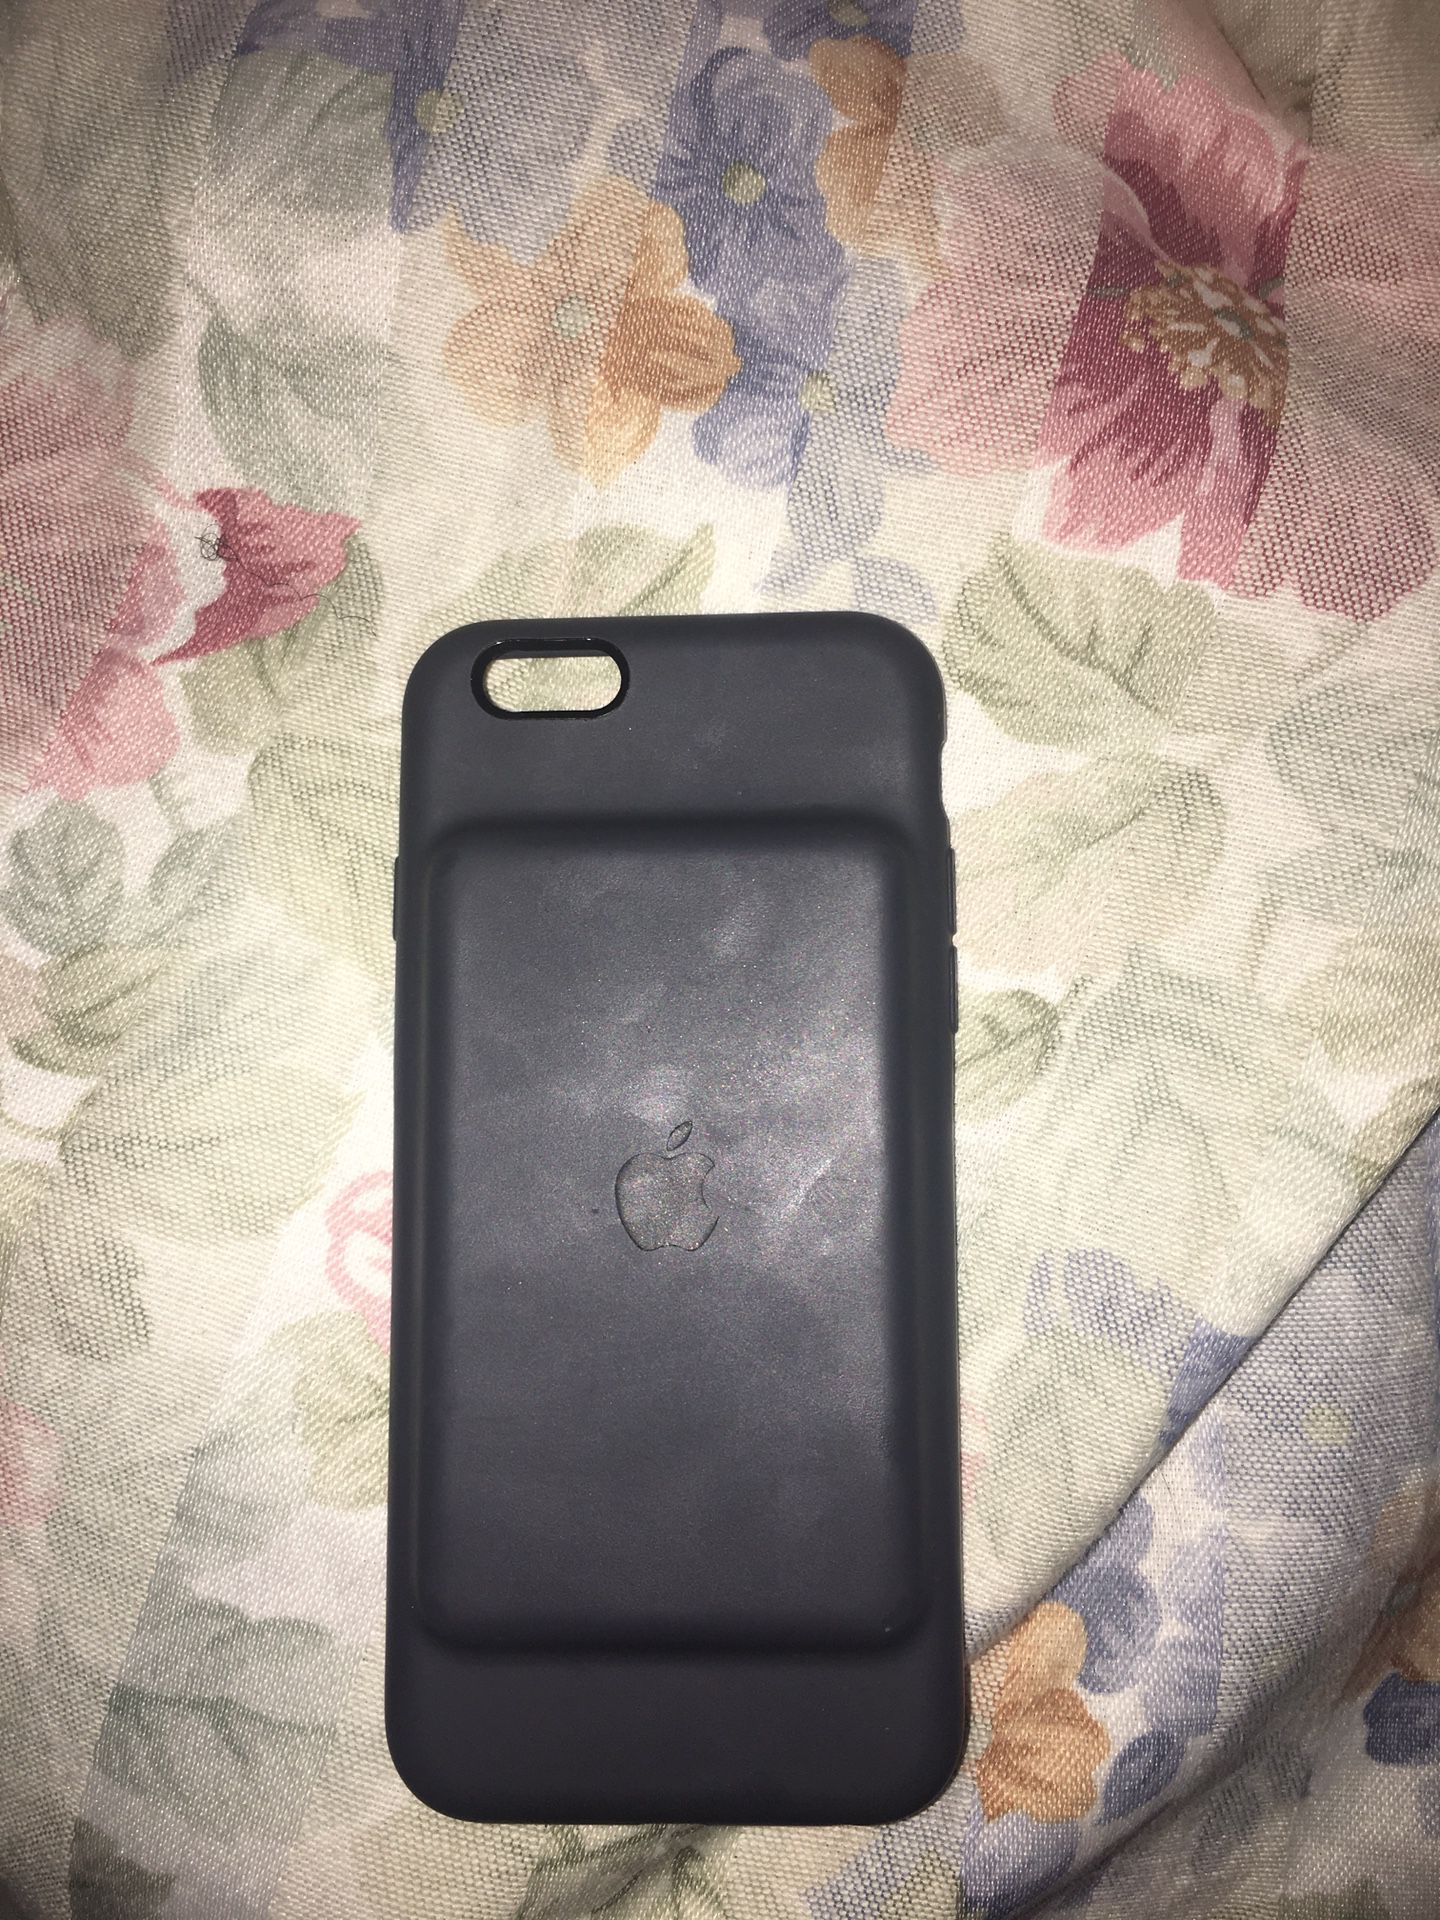 Apple-iPhone 7 Smart Battery Case - Black